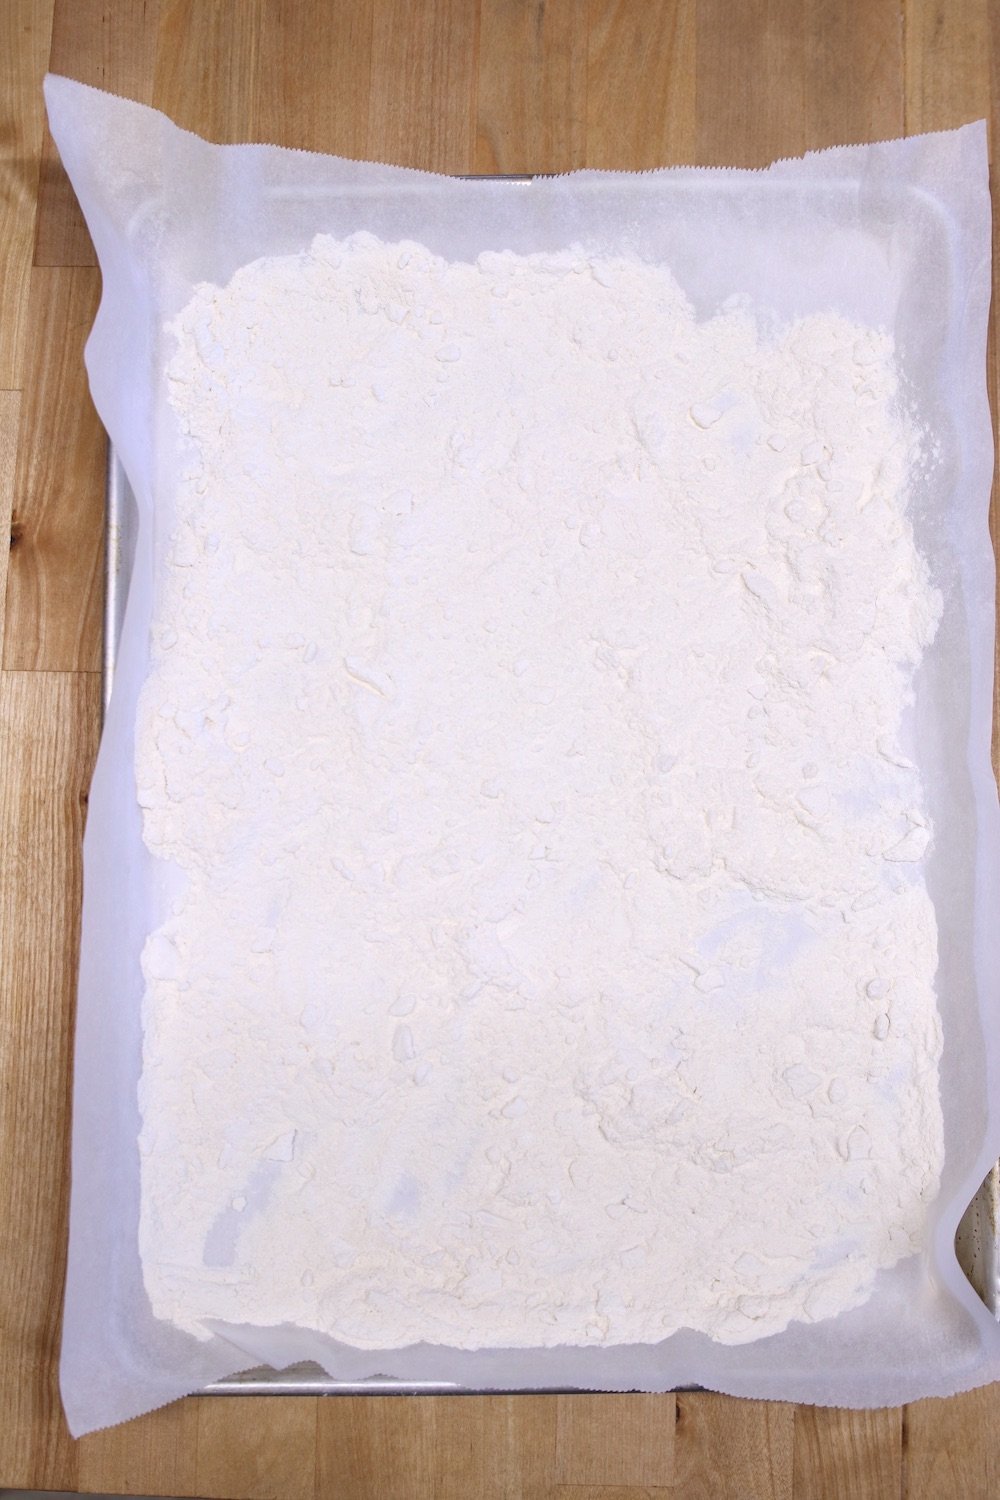 flour on a parchment lined baking sheet